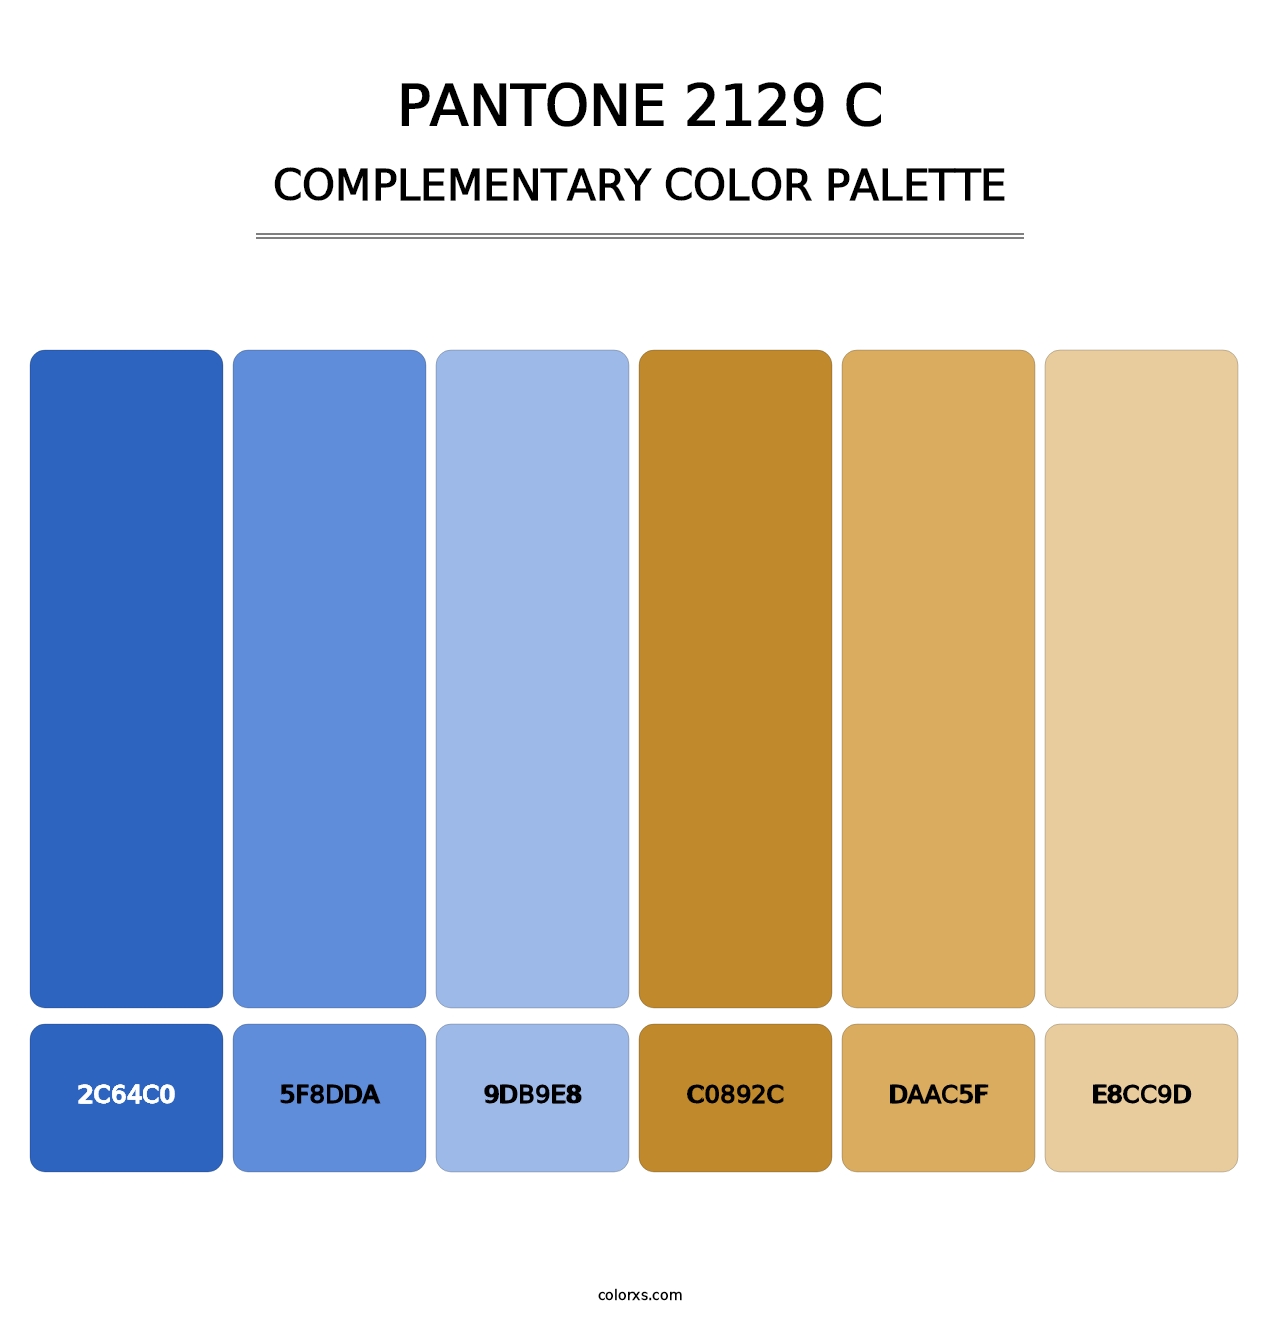 PANTONE 2129 C - Complementary Color Palette